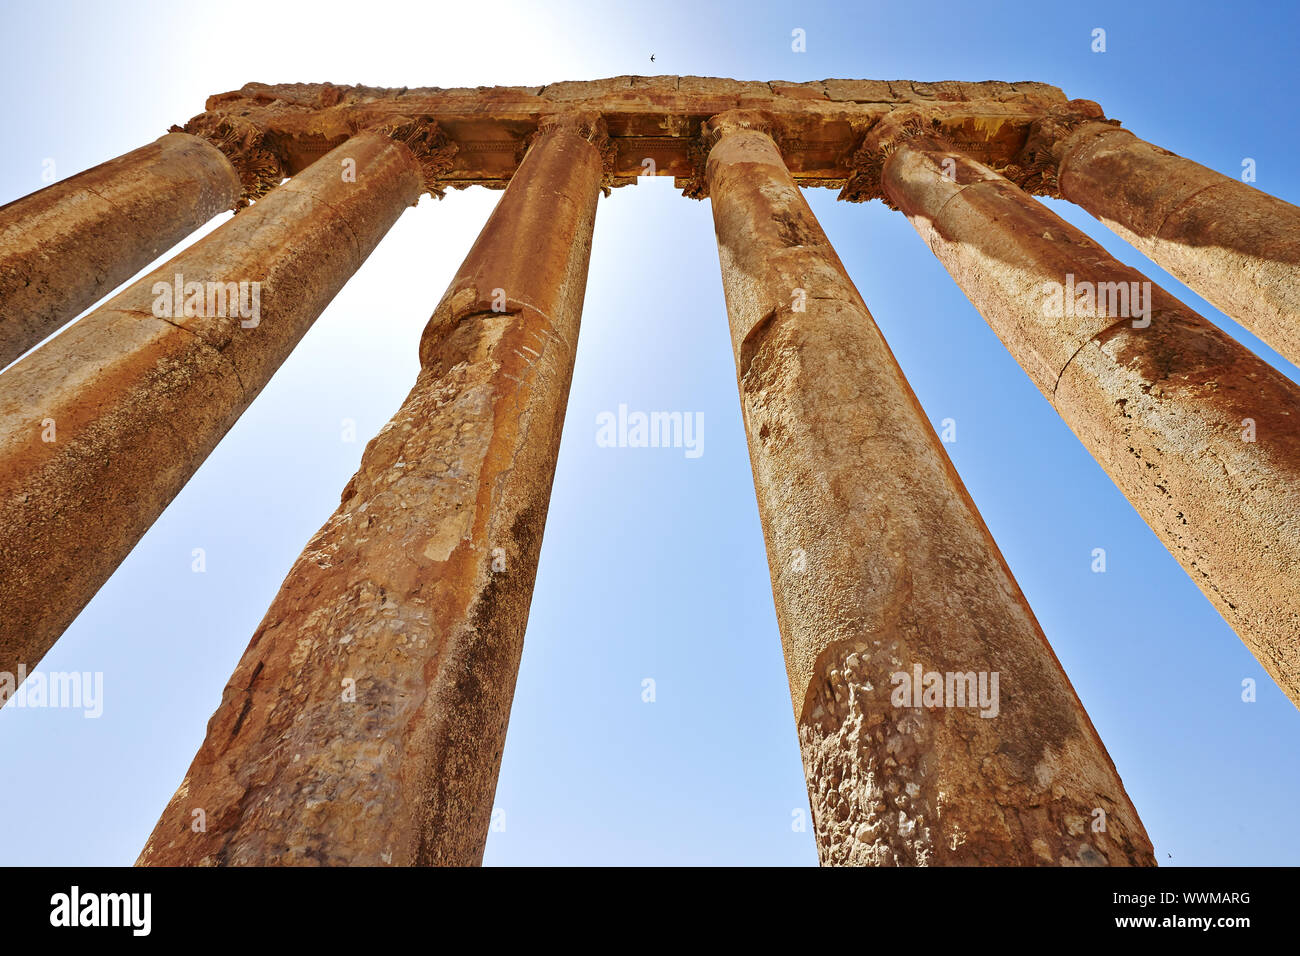 Jupiter columns (Temple of Jupiter) - Baalbek, Lebanon Stock Photo